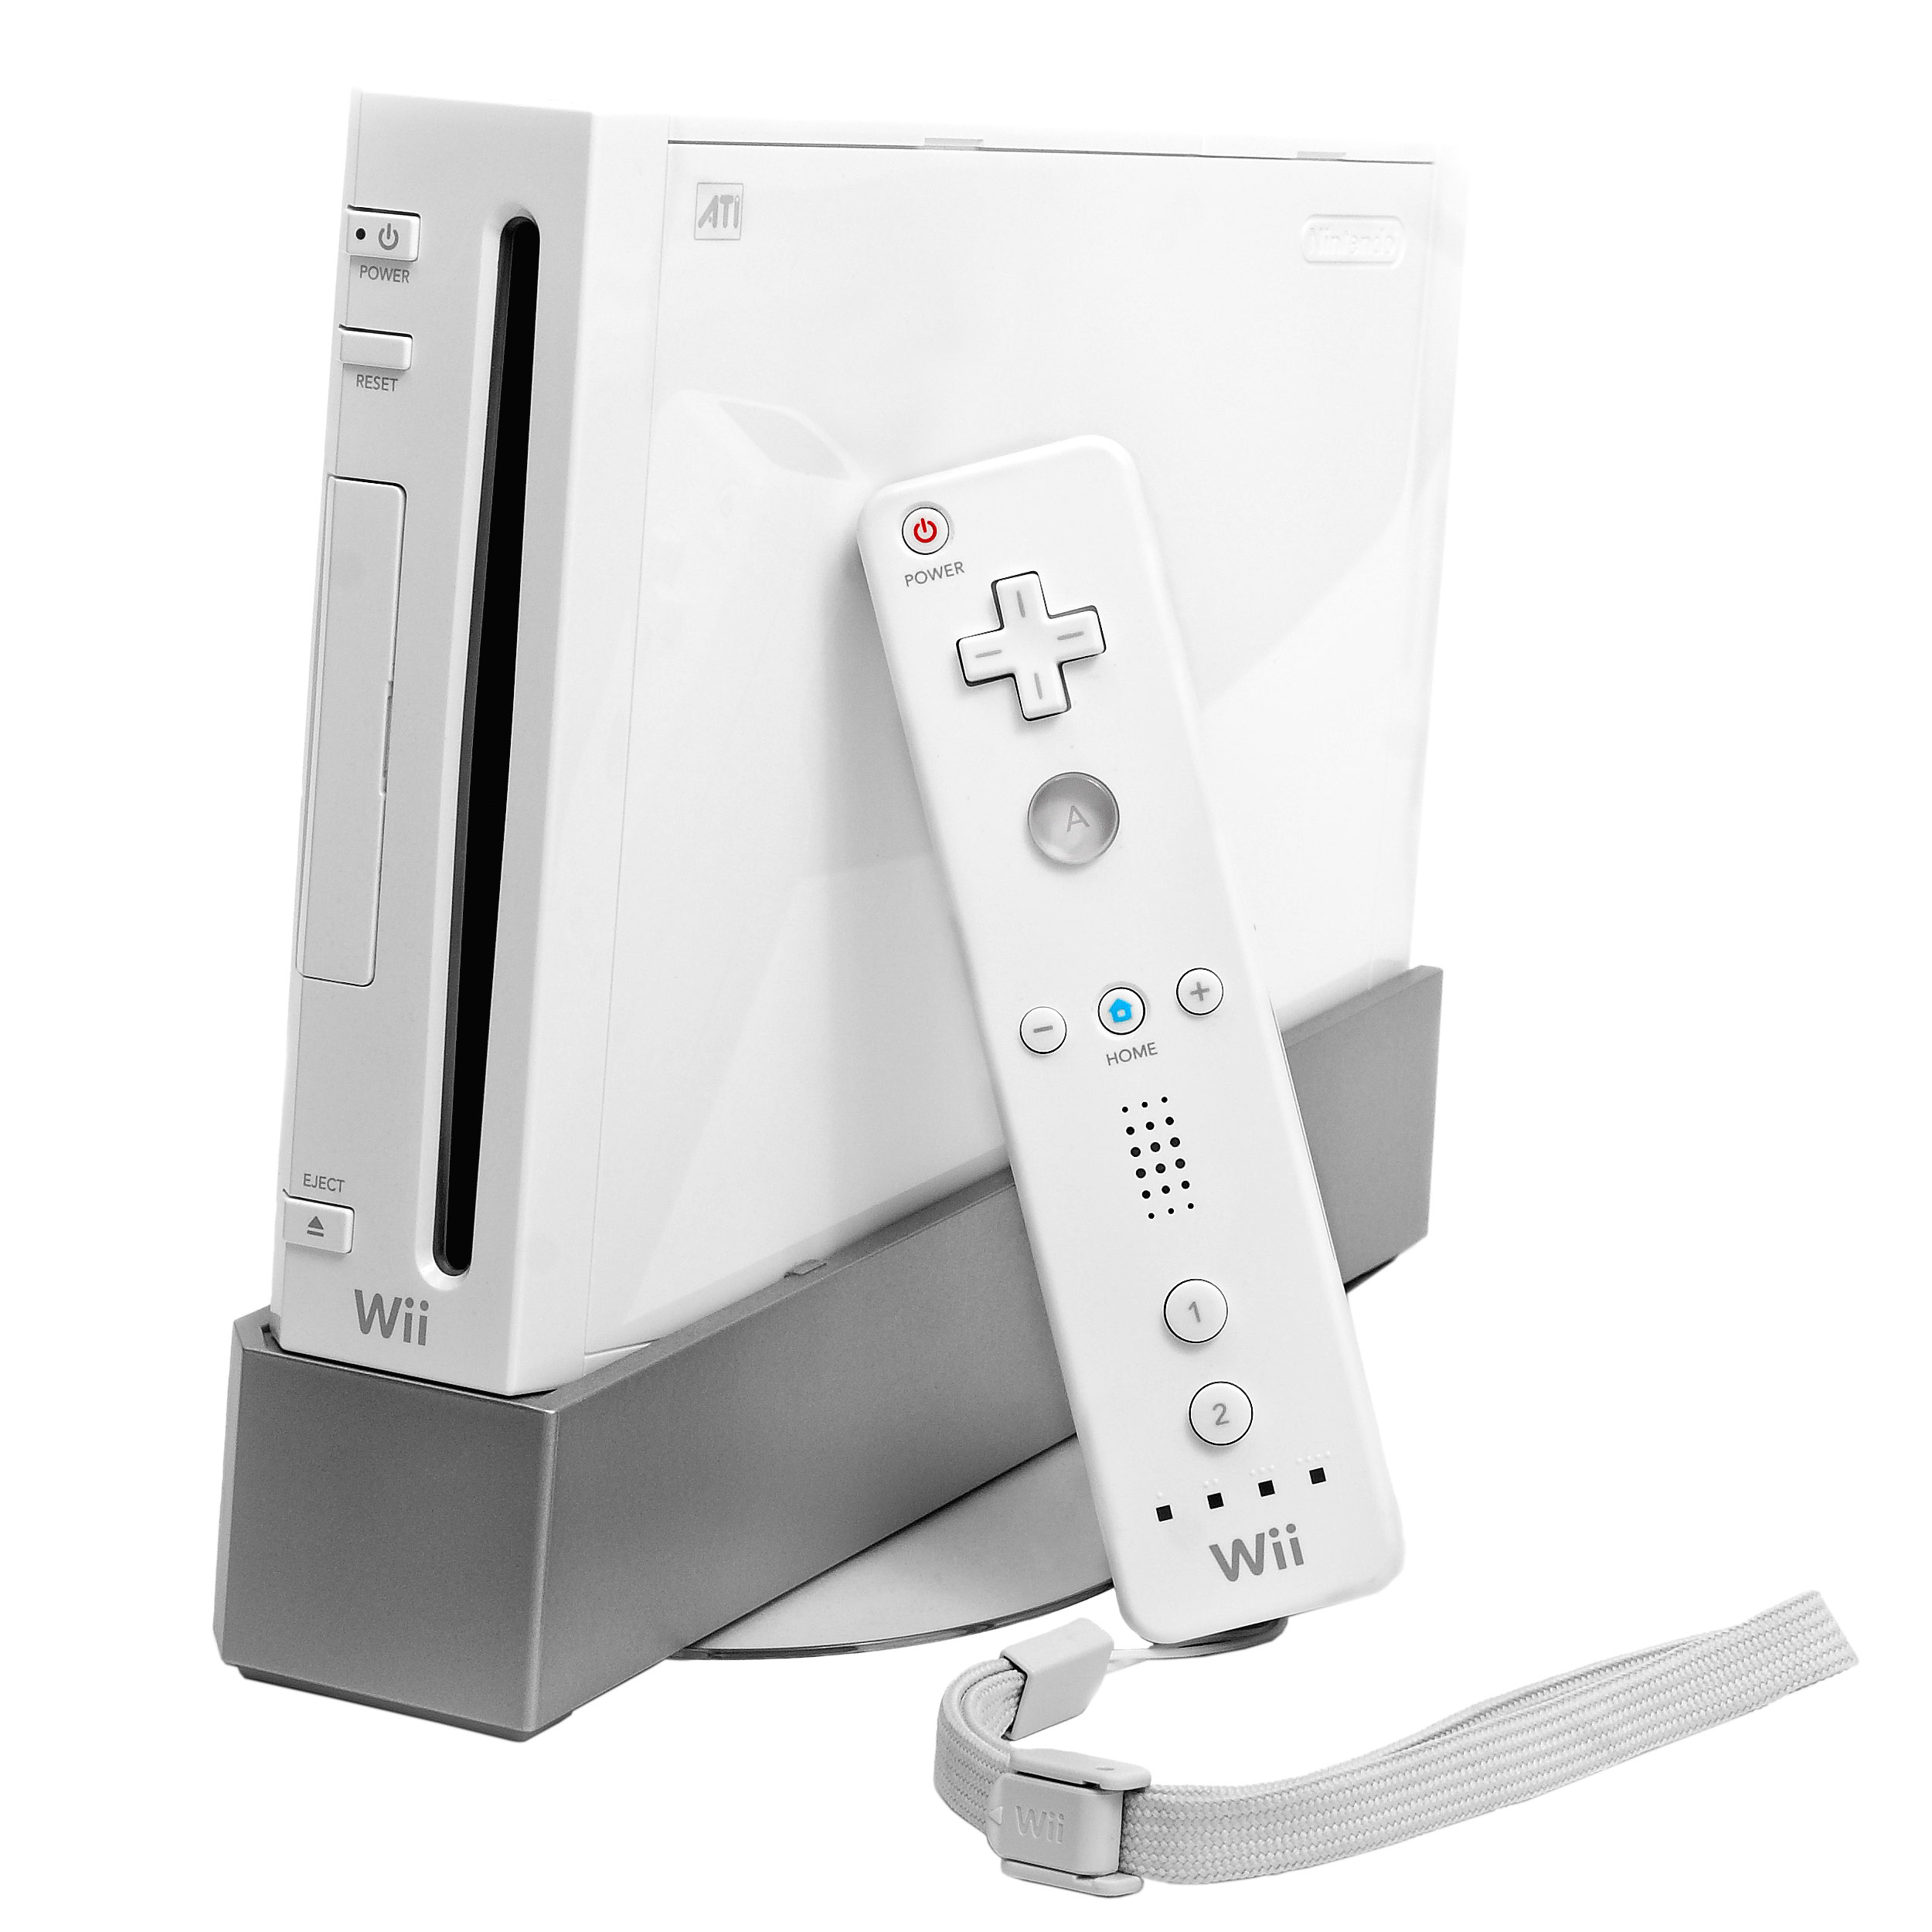 Nintendo Wii image failed to load